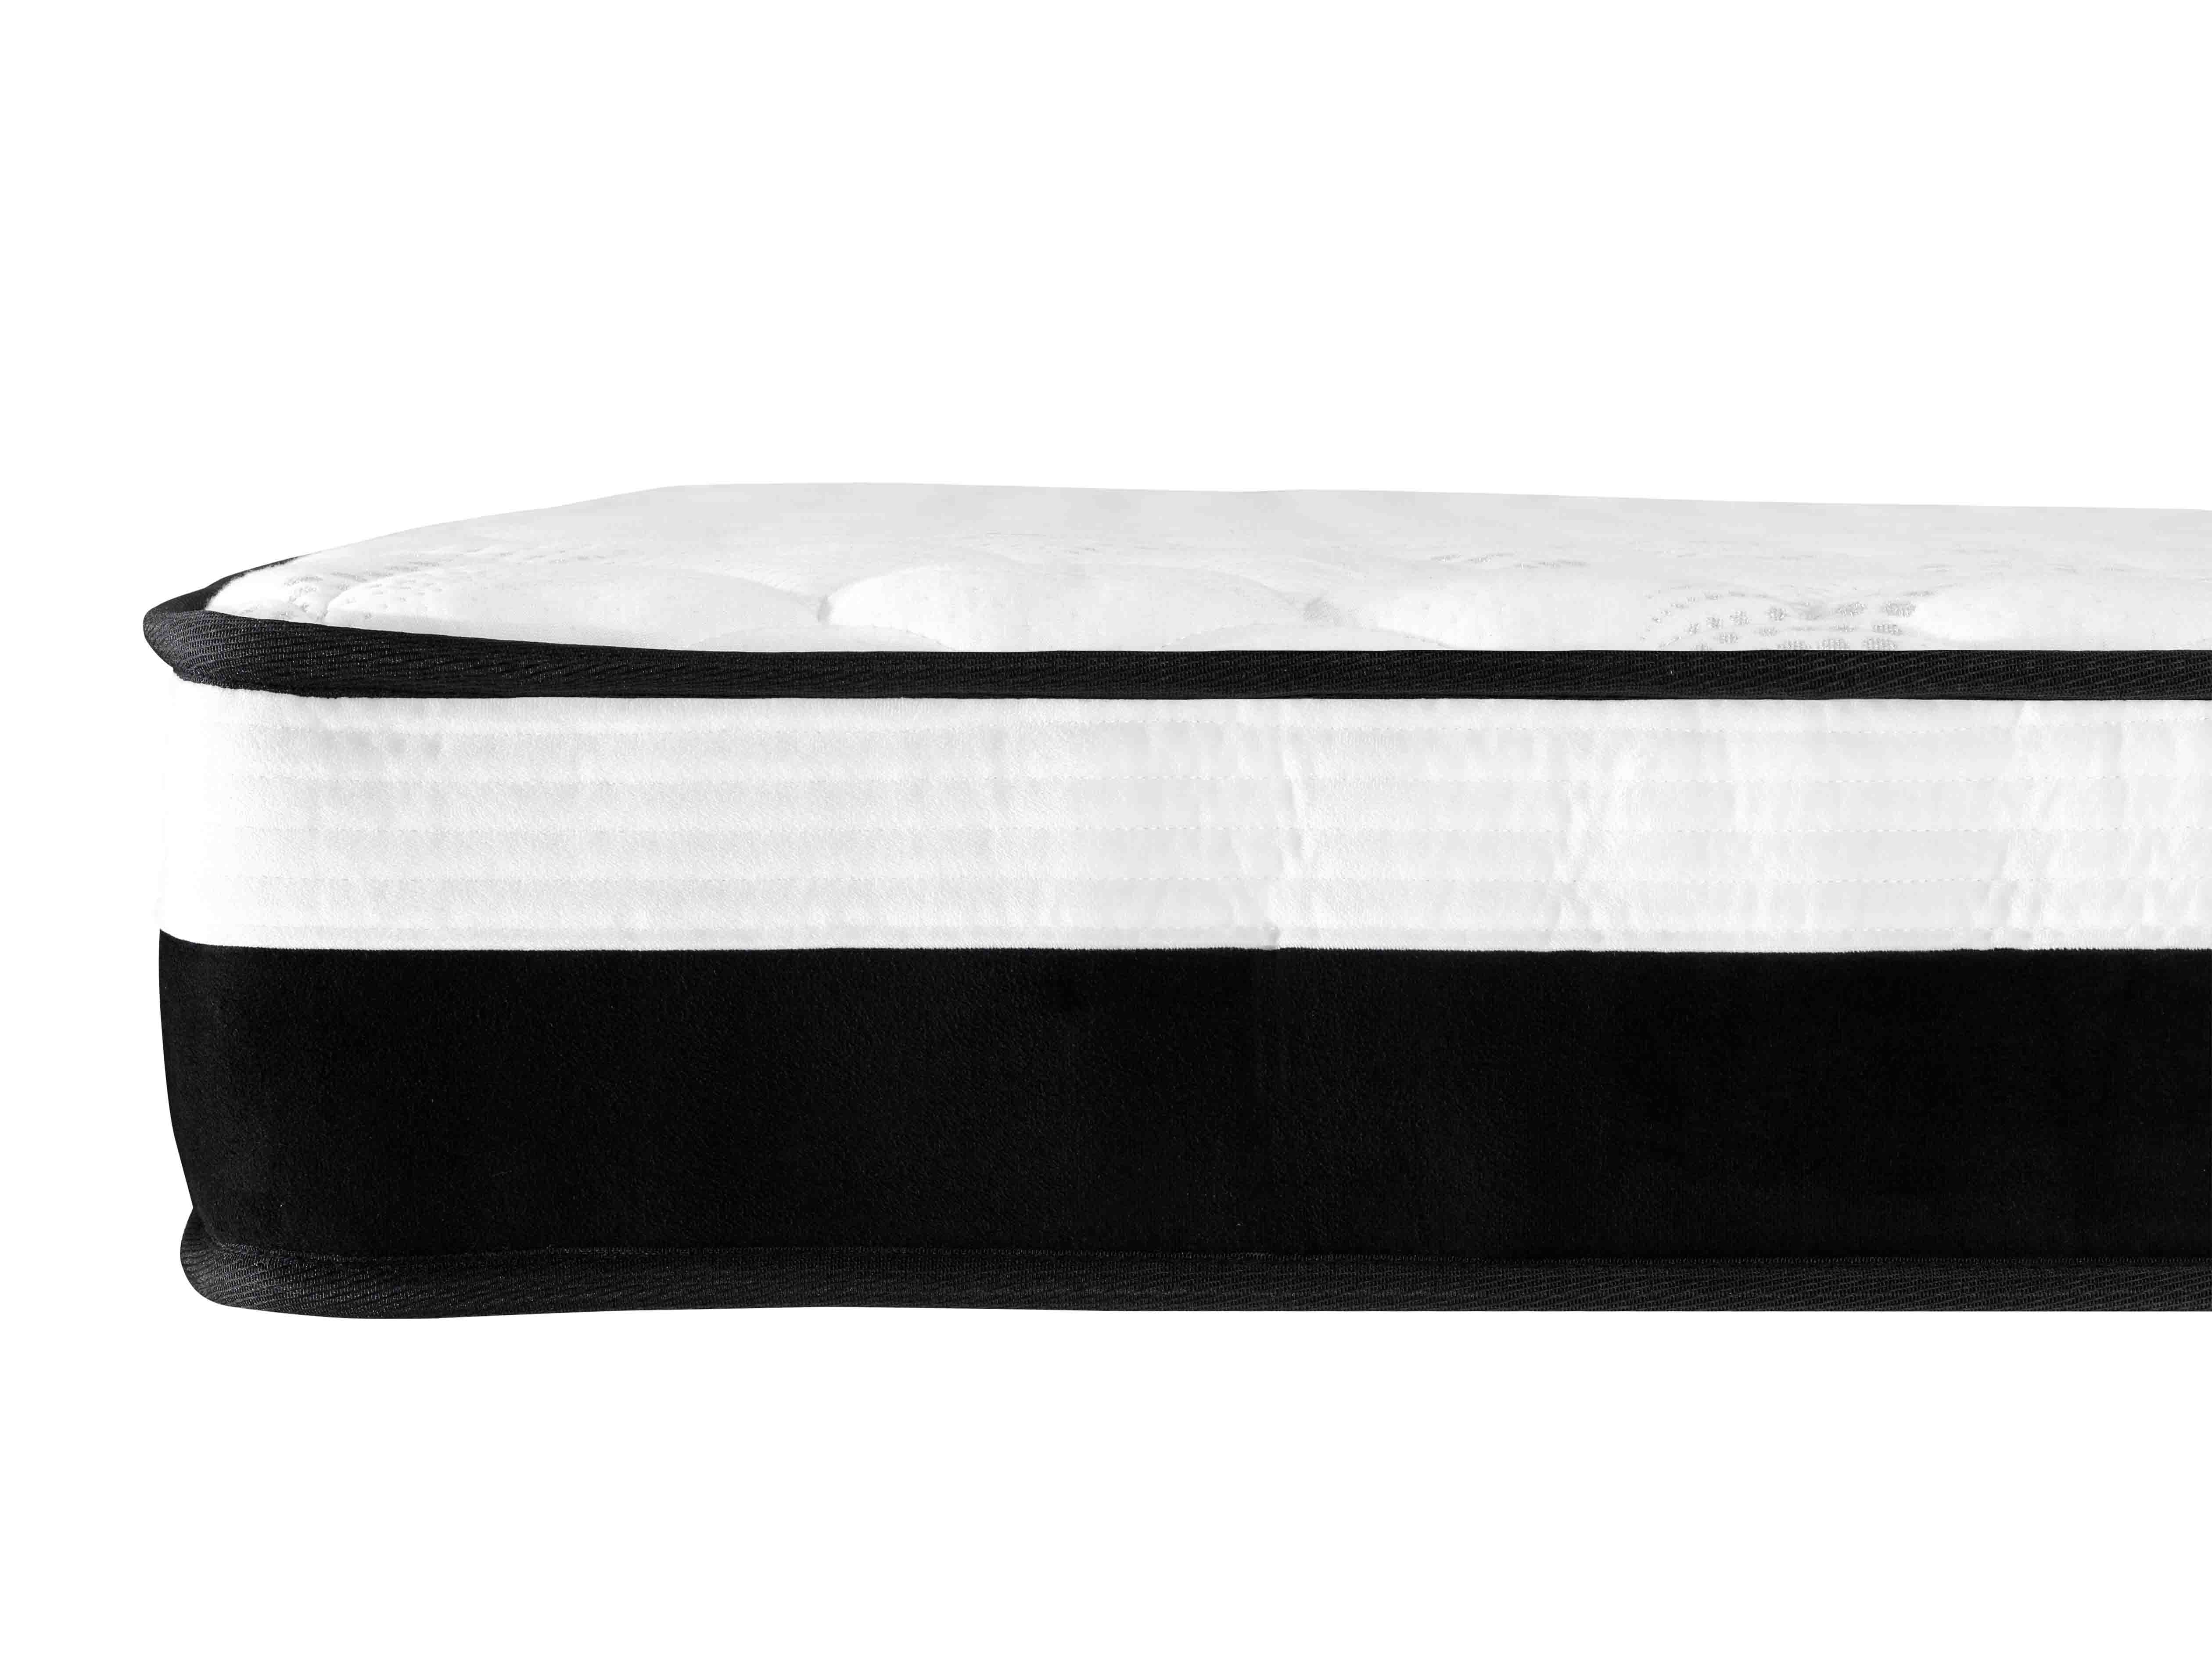 vacuum compressed memory foam pocket spring mattresses for sale